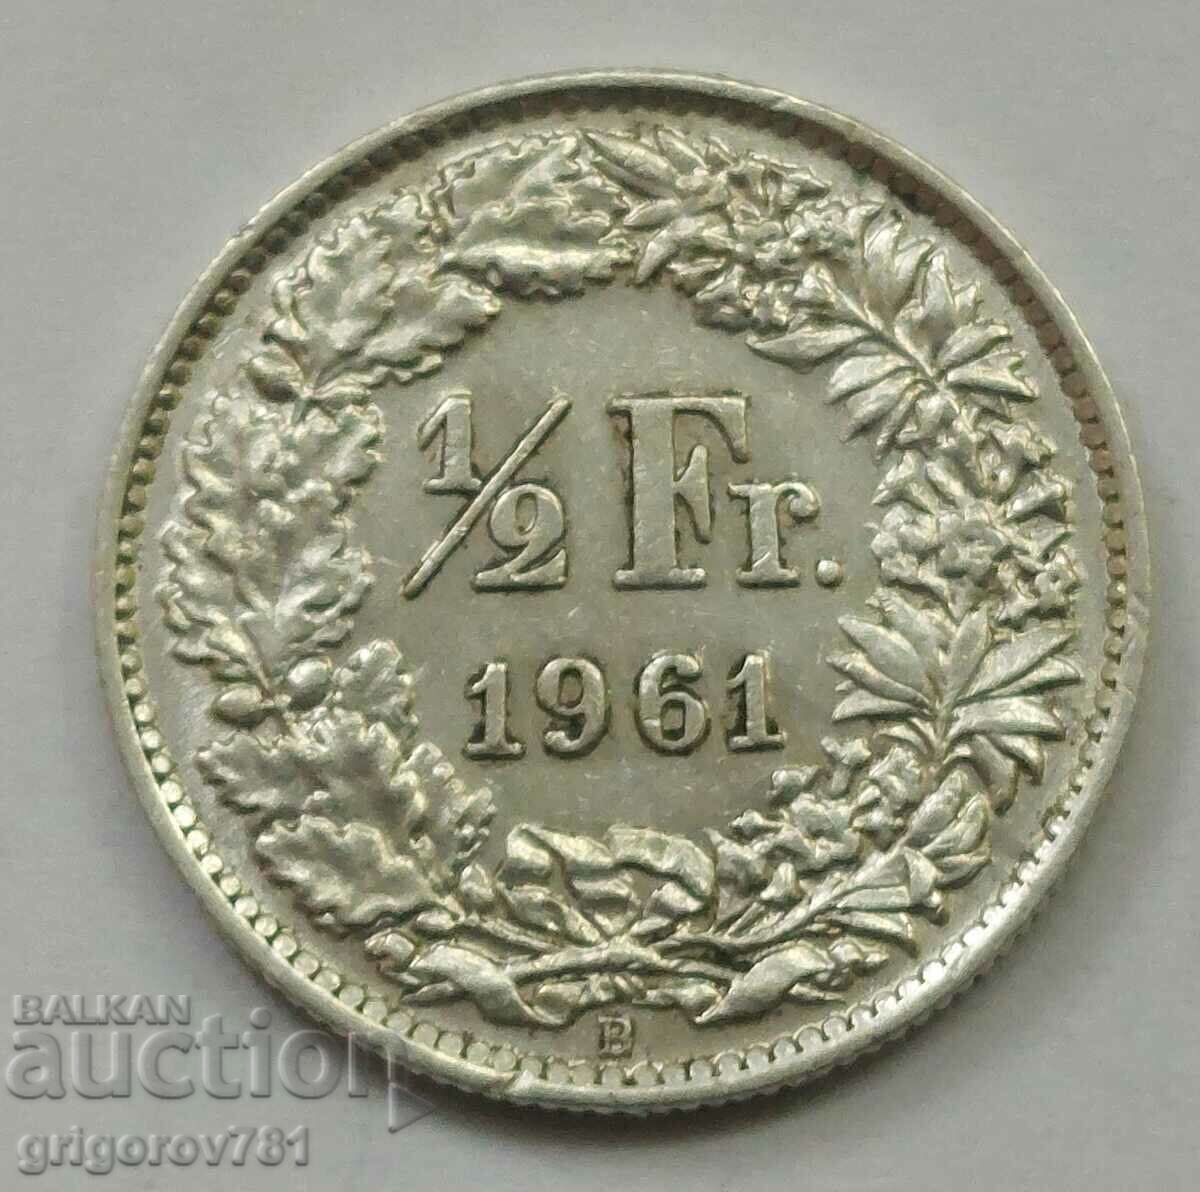 1/2 Franc Silver Switzerland 1961 B - Silver Coin #156